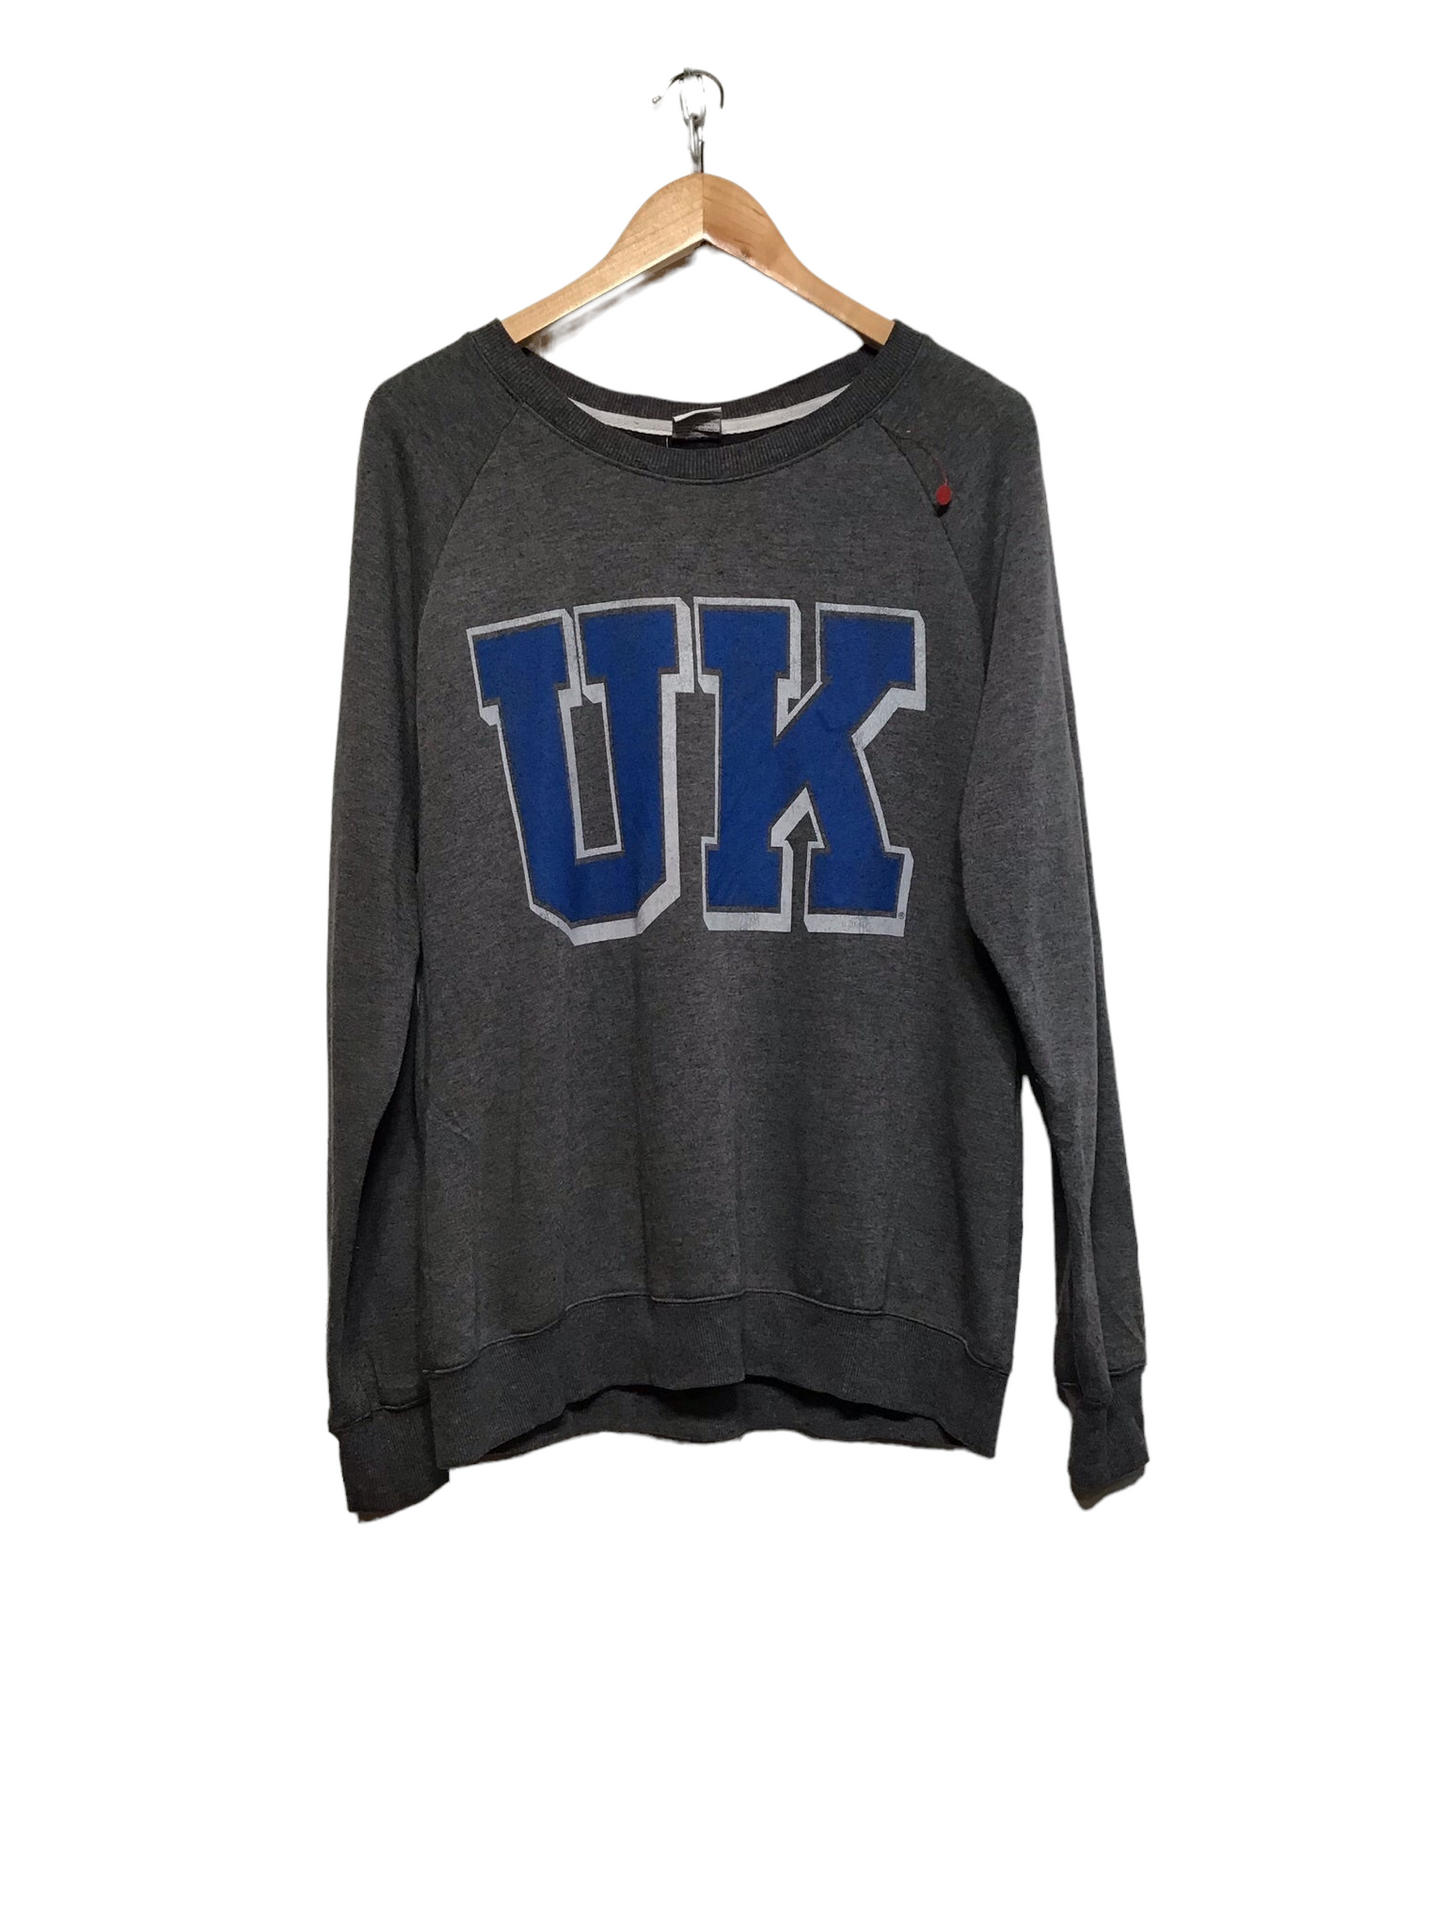 UK Print Sweatshirt (Size M)